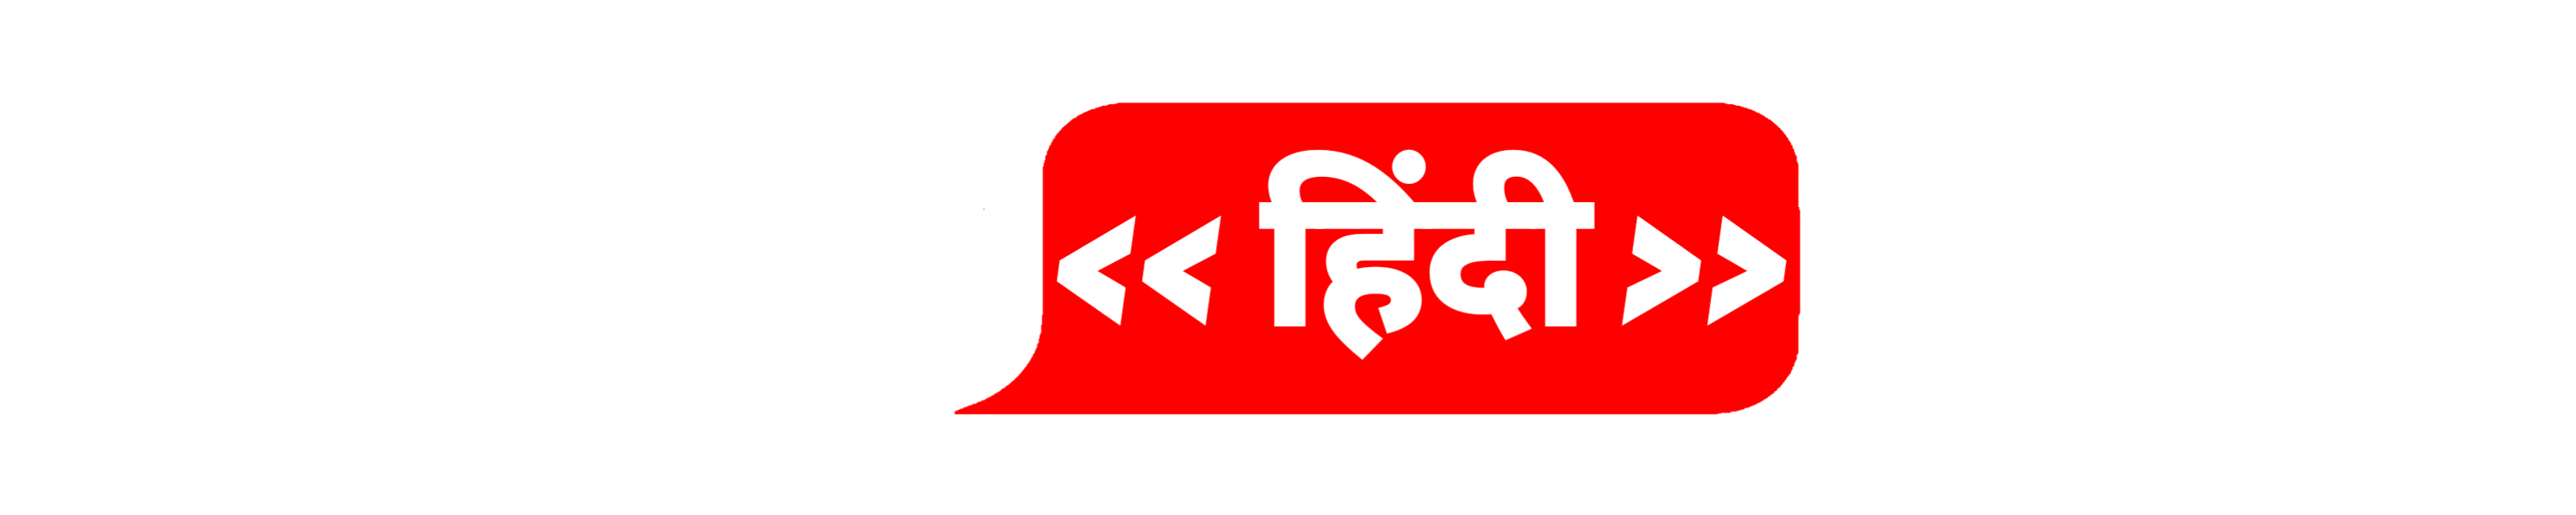 Tech Blogging Hindi